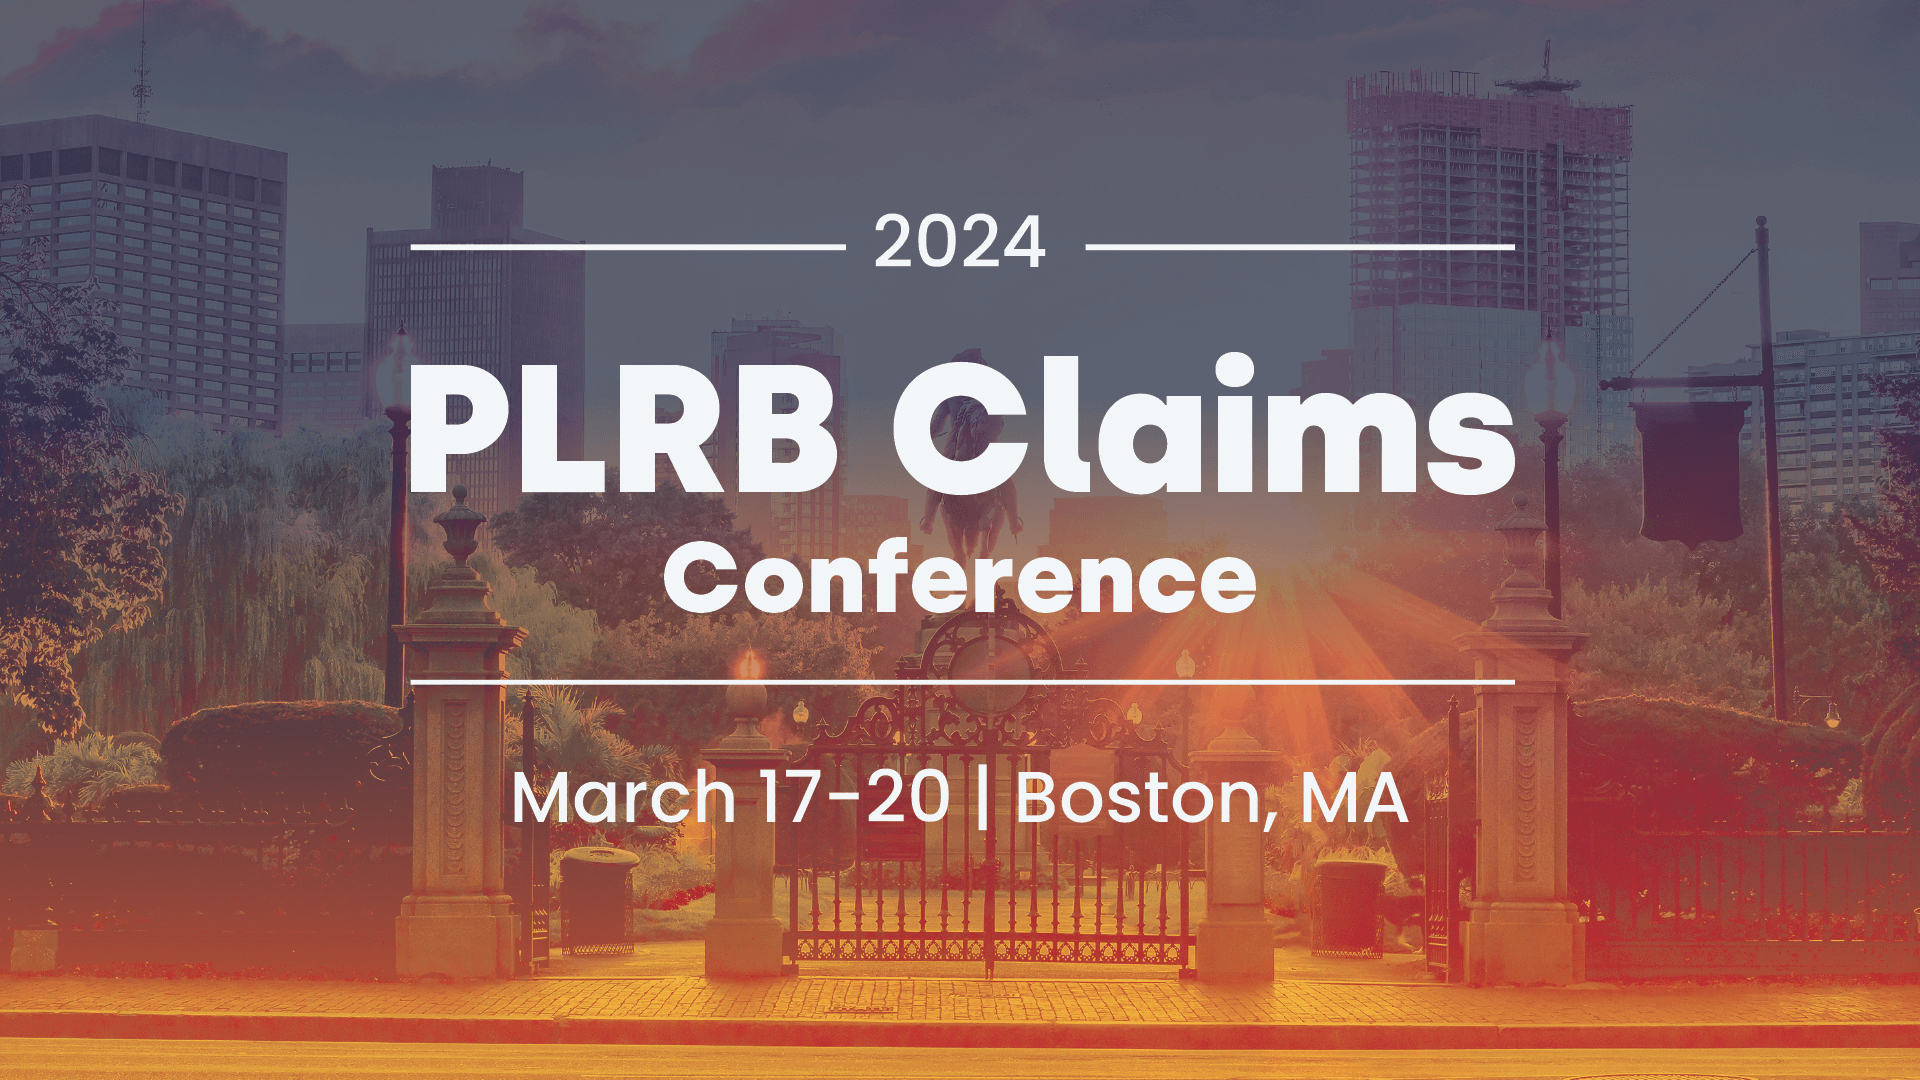 PLRB Claims Conference 2024 CoreLogic®